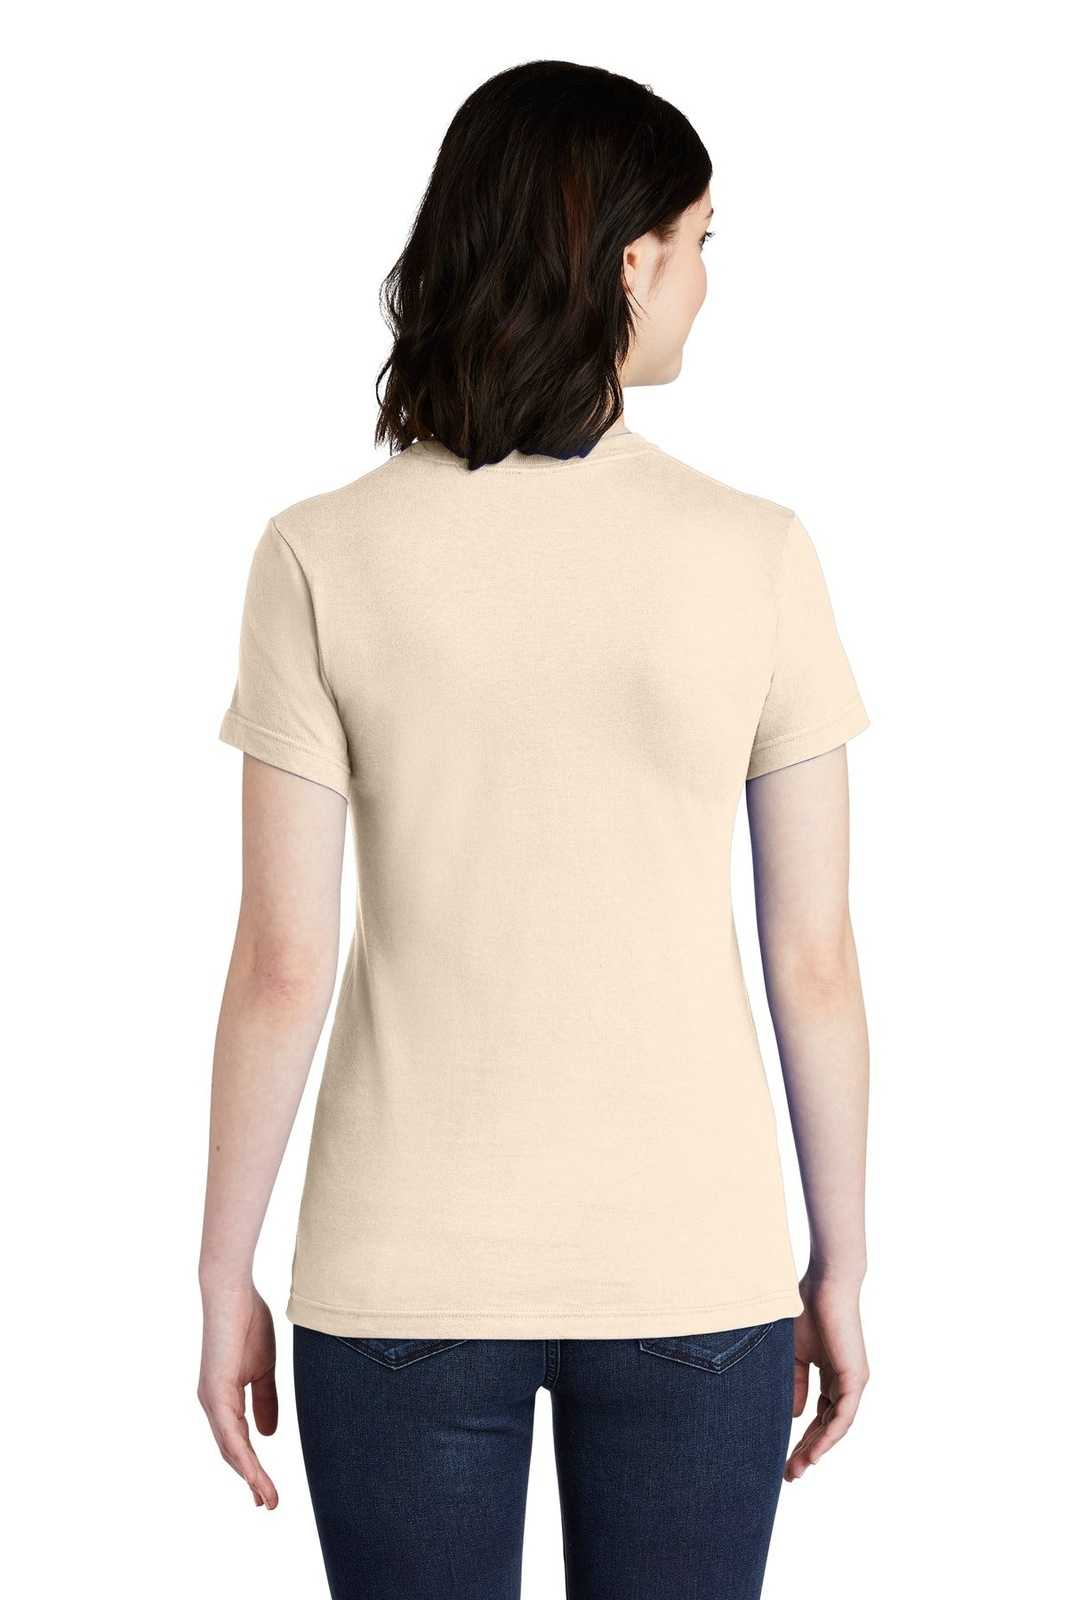 American Apparel 2102W Women's Fine Jersey T-Shirt - Creme - HIT a Double